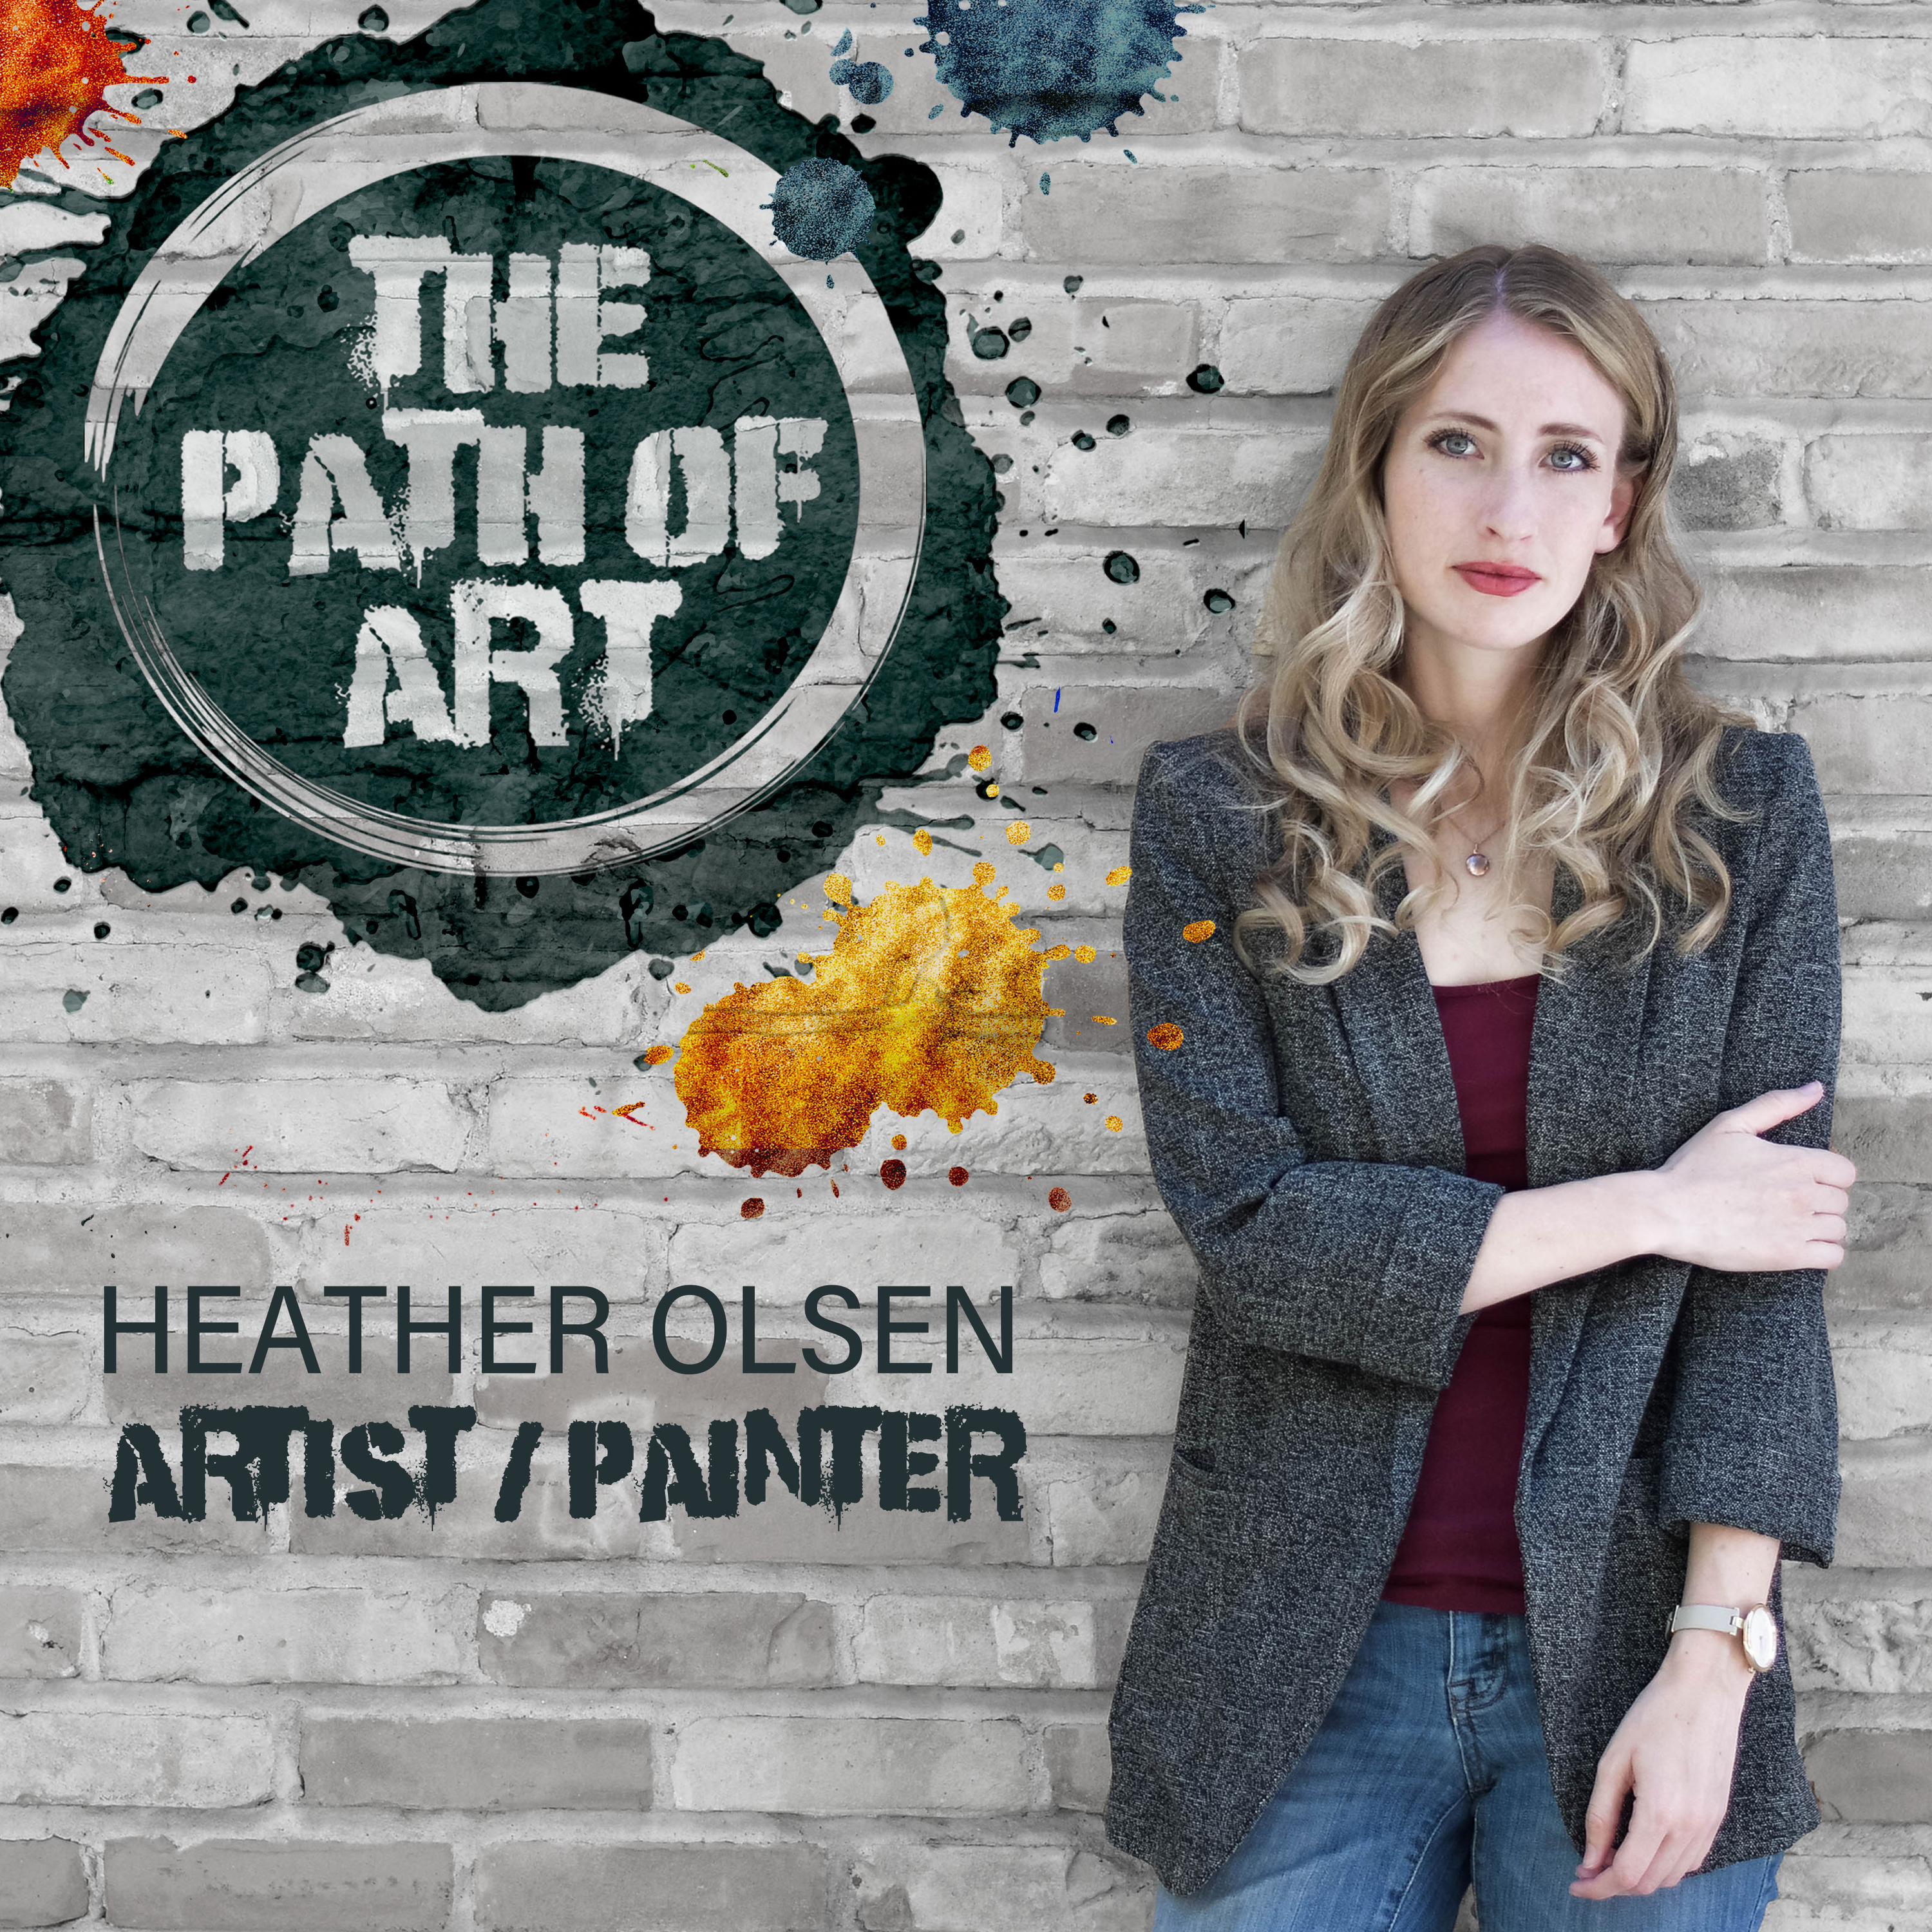 #3 Heather Olsen: How opportunities connect